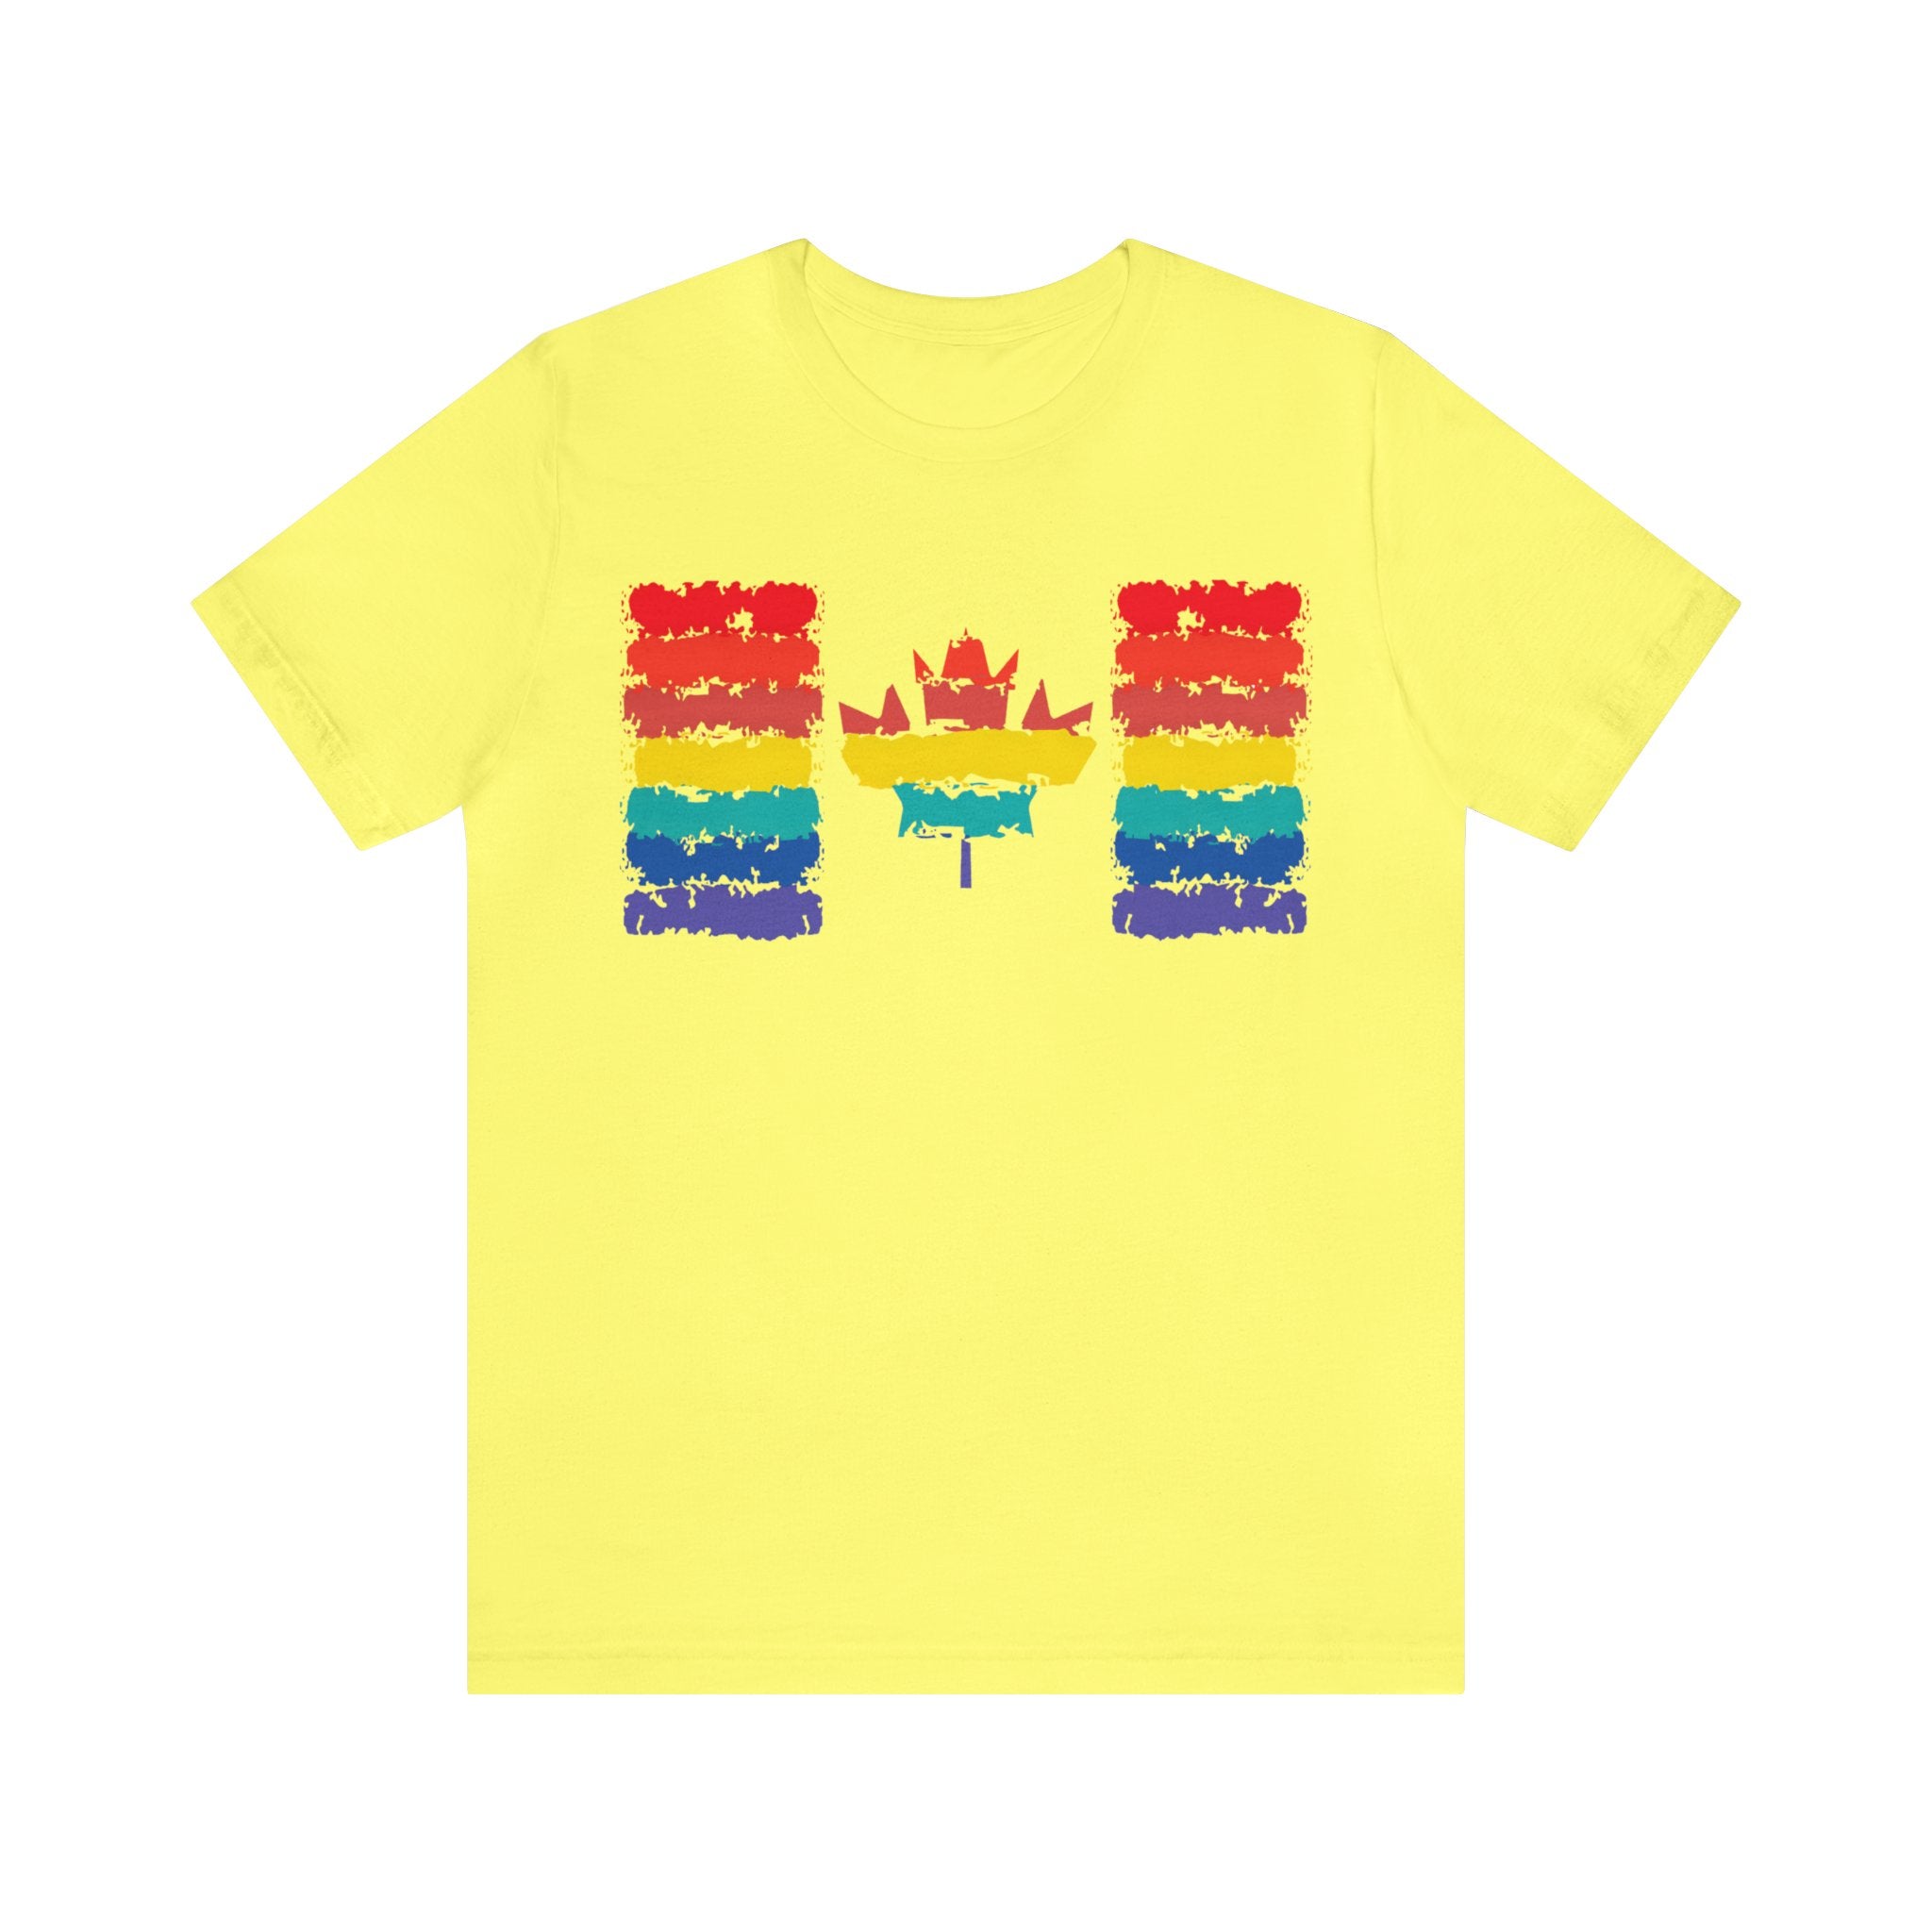 Black Friday Canada! : Unisex 100% Comfy Cotton, T-Shirt by Bella+Canvas